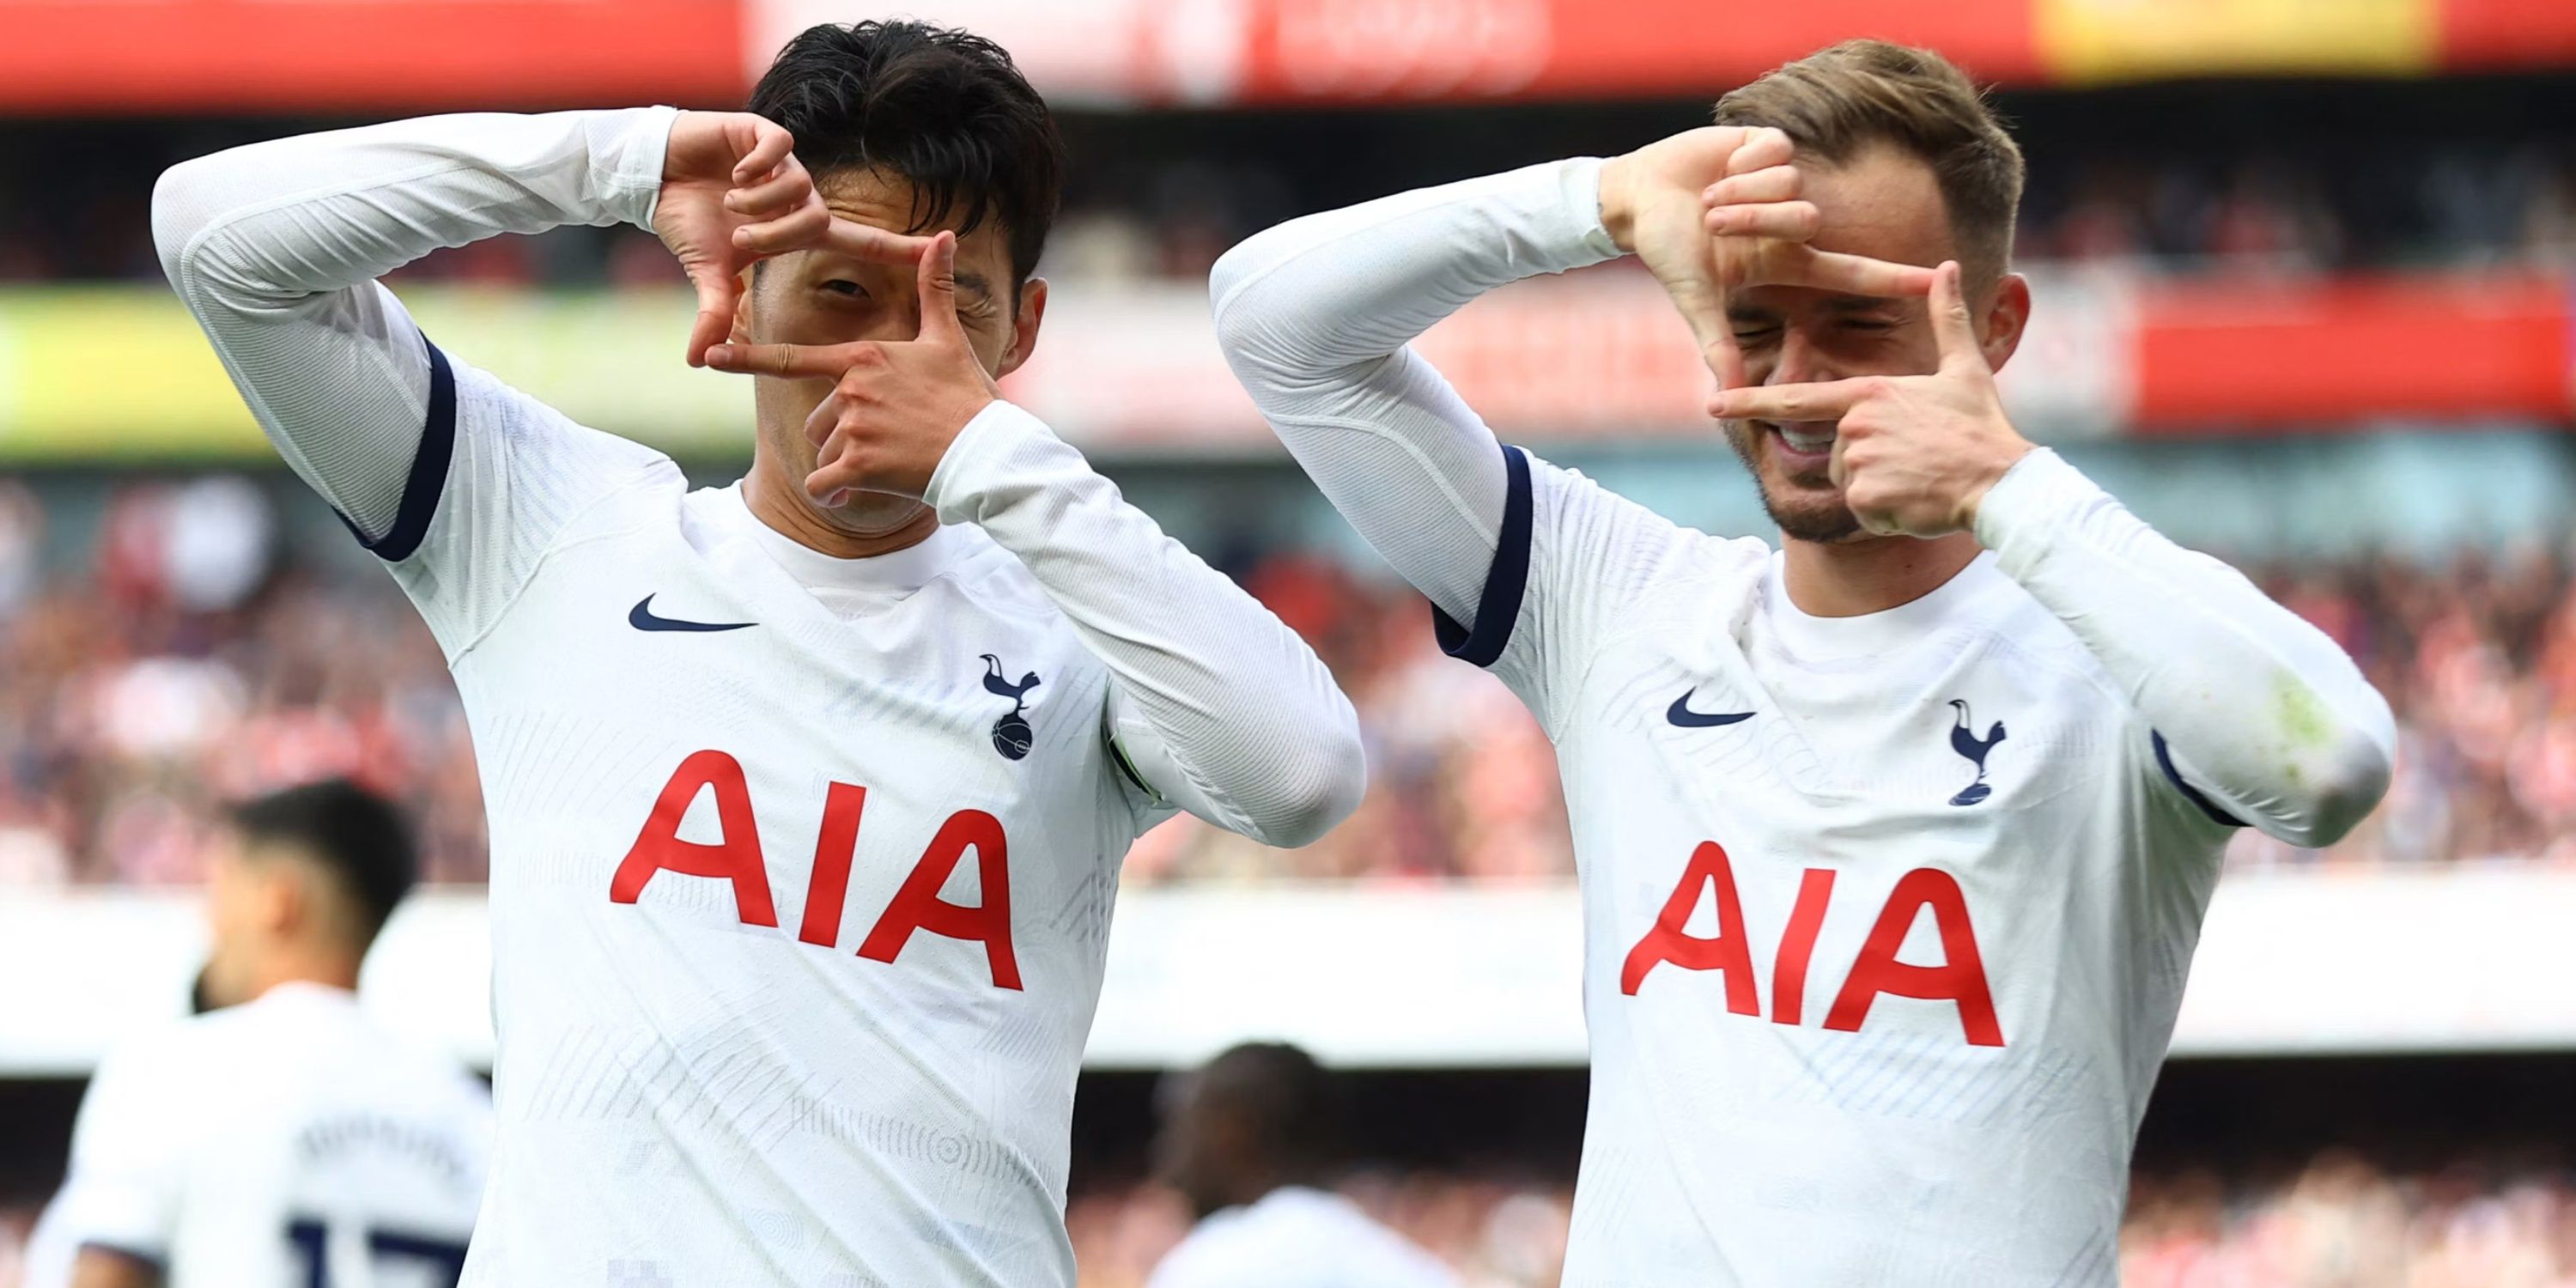 Tottenham Hotspur forwards James Maddison and Heung-min Son